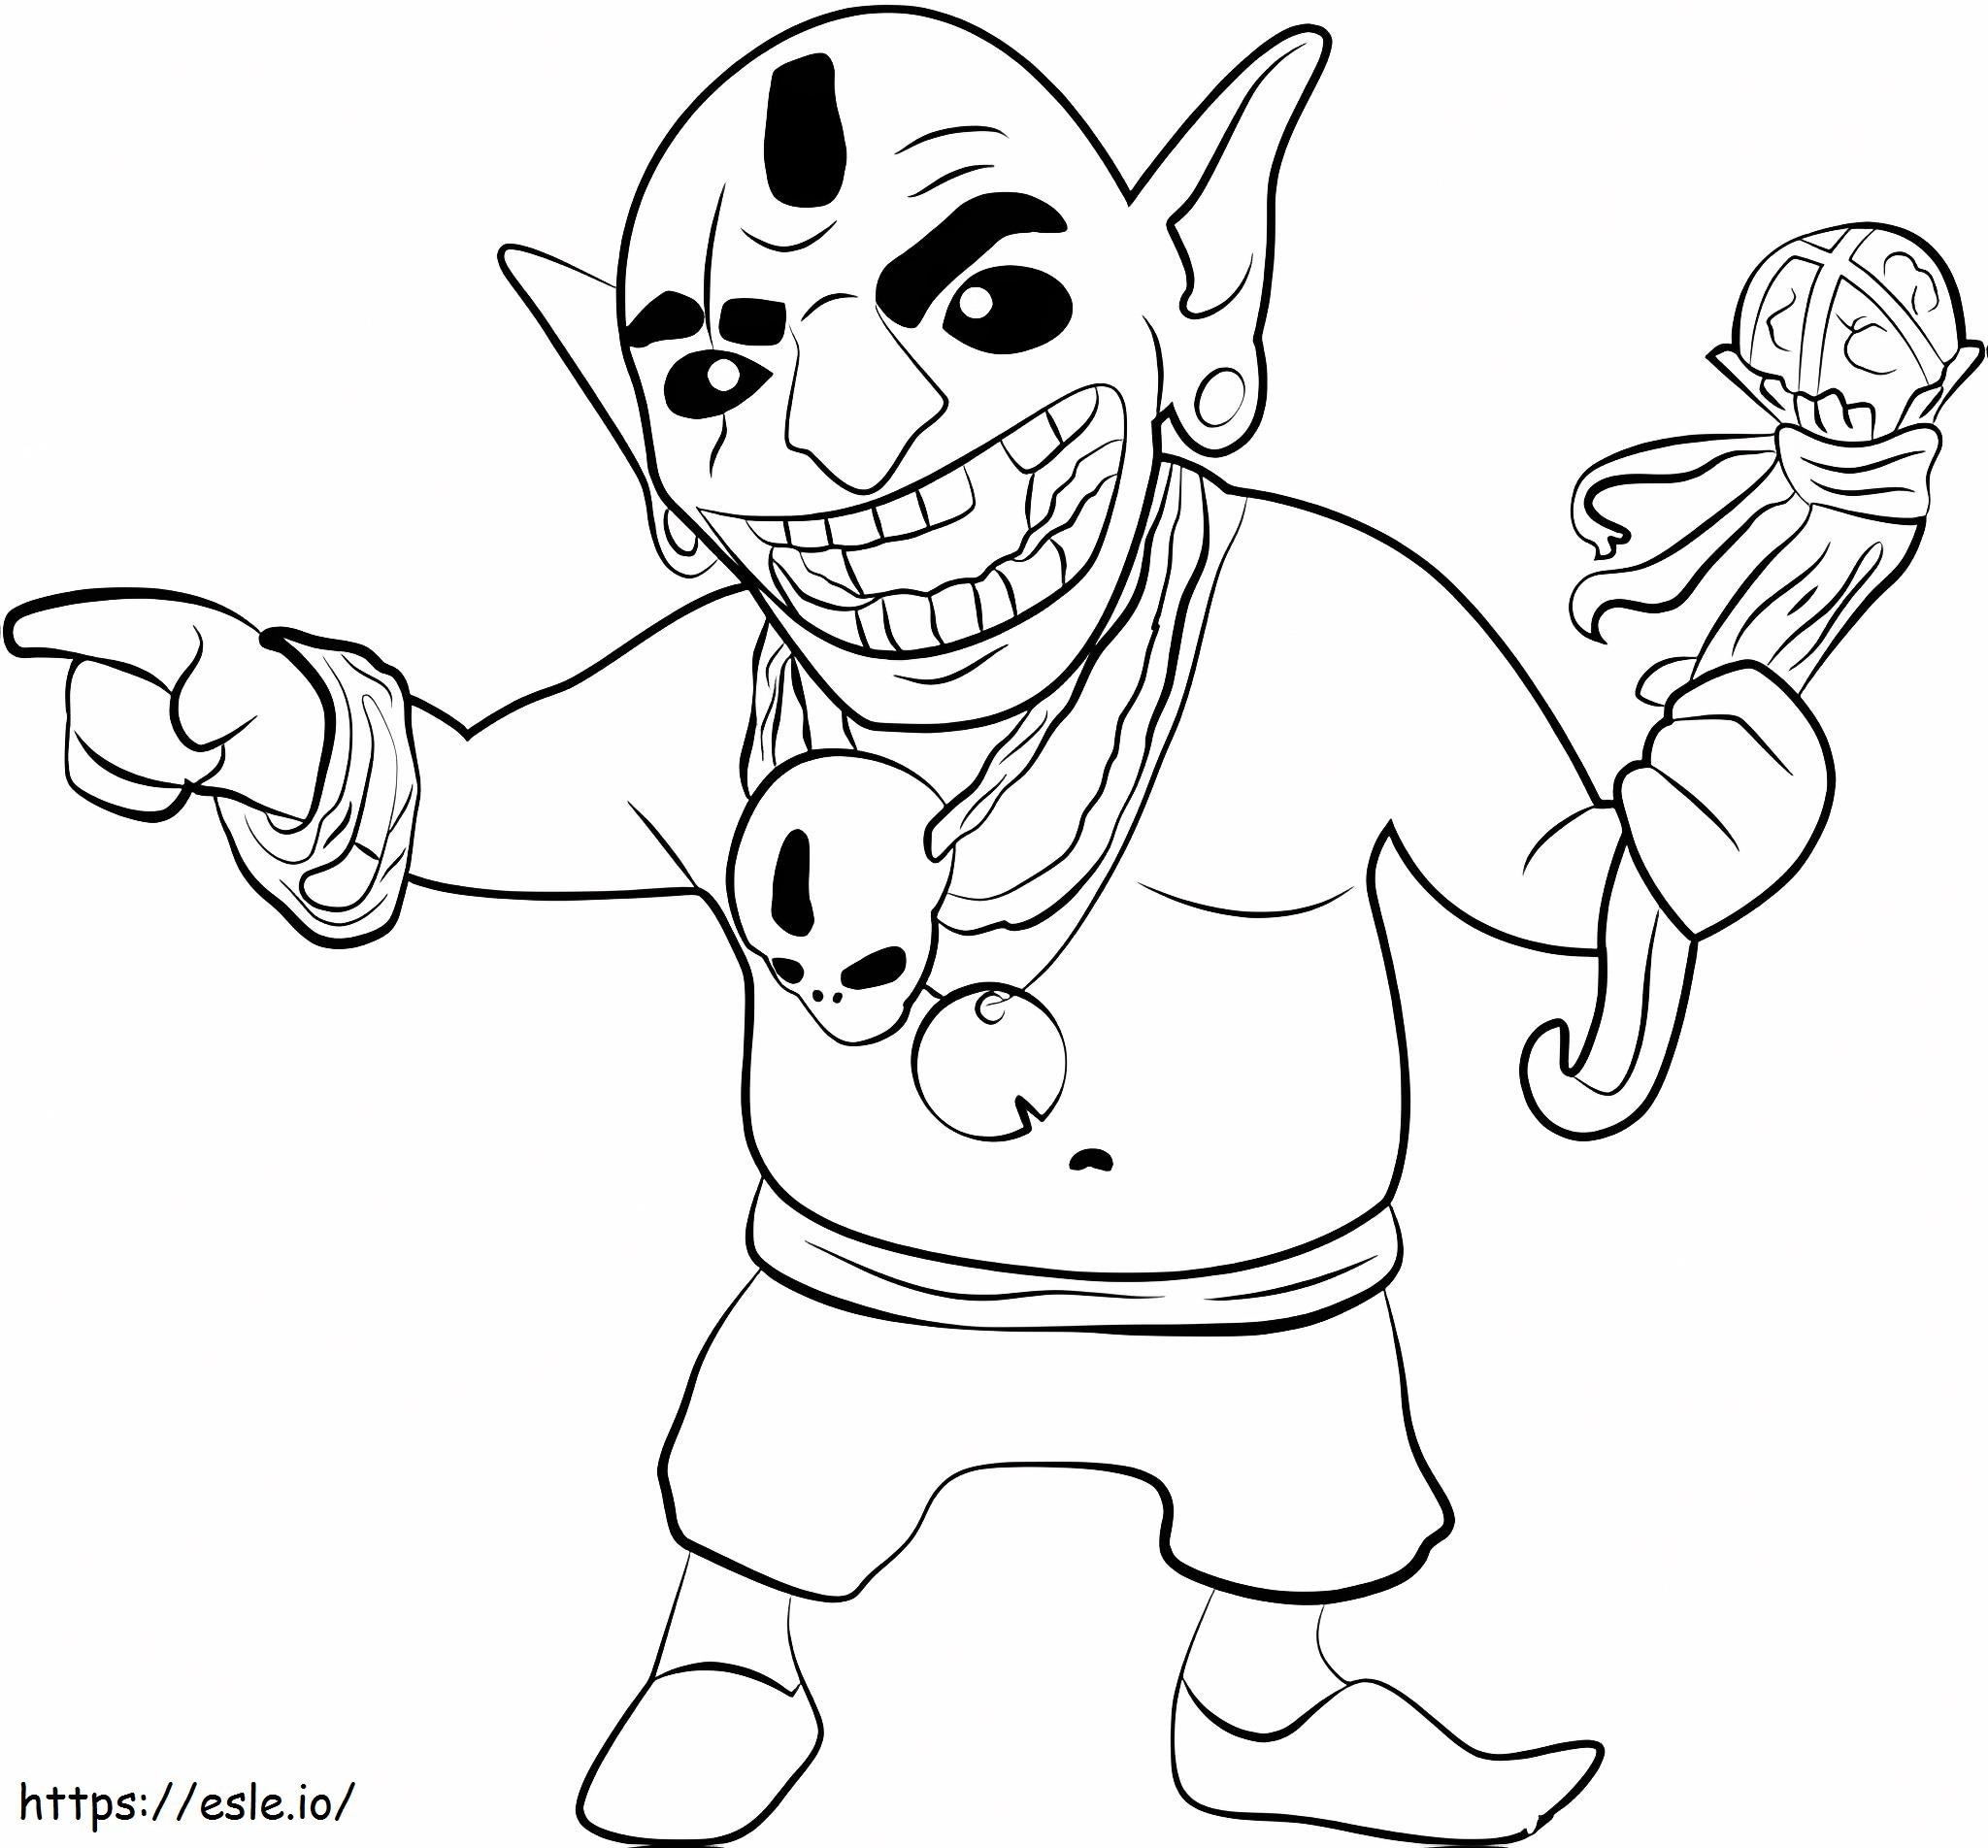 Funny Goblin coloring page